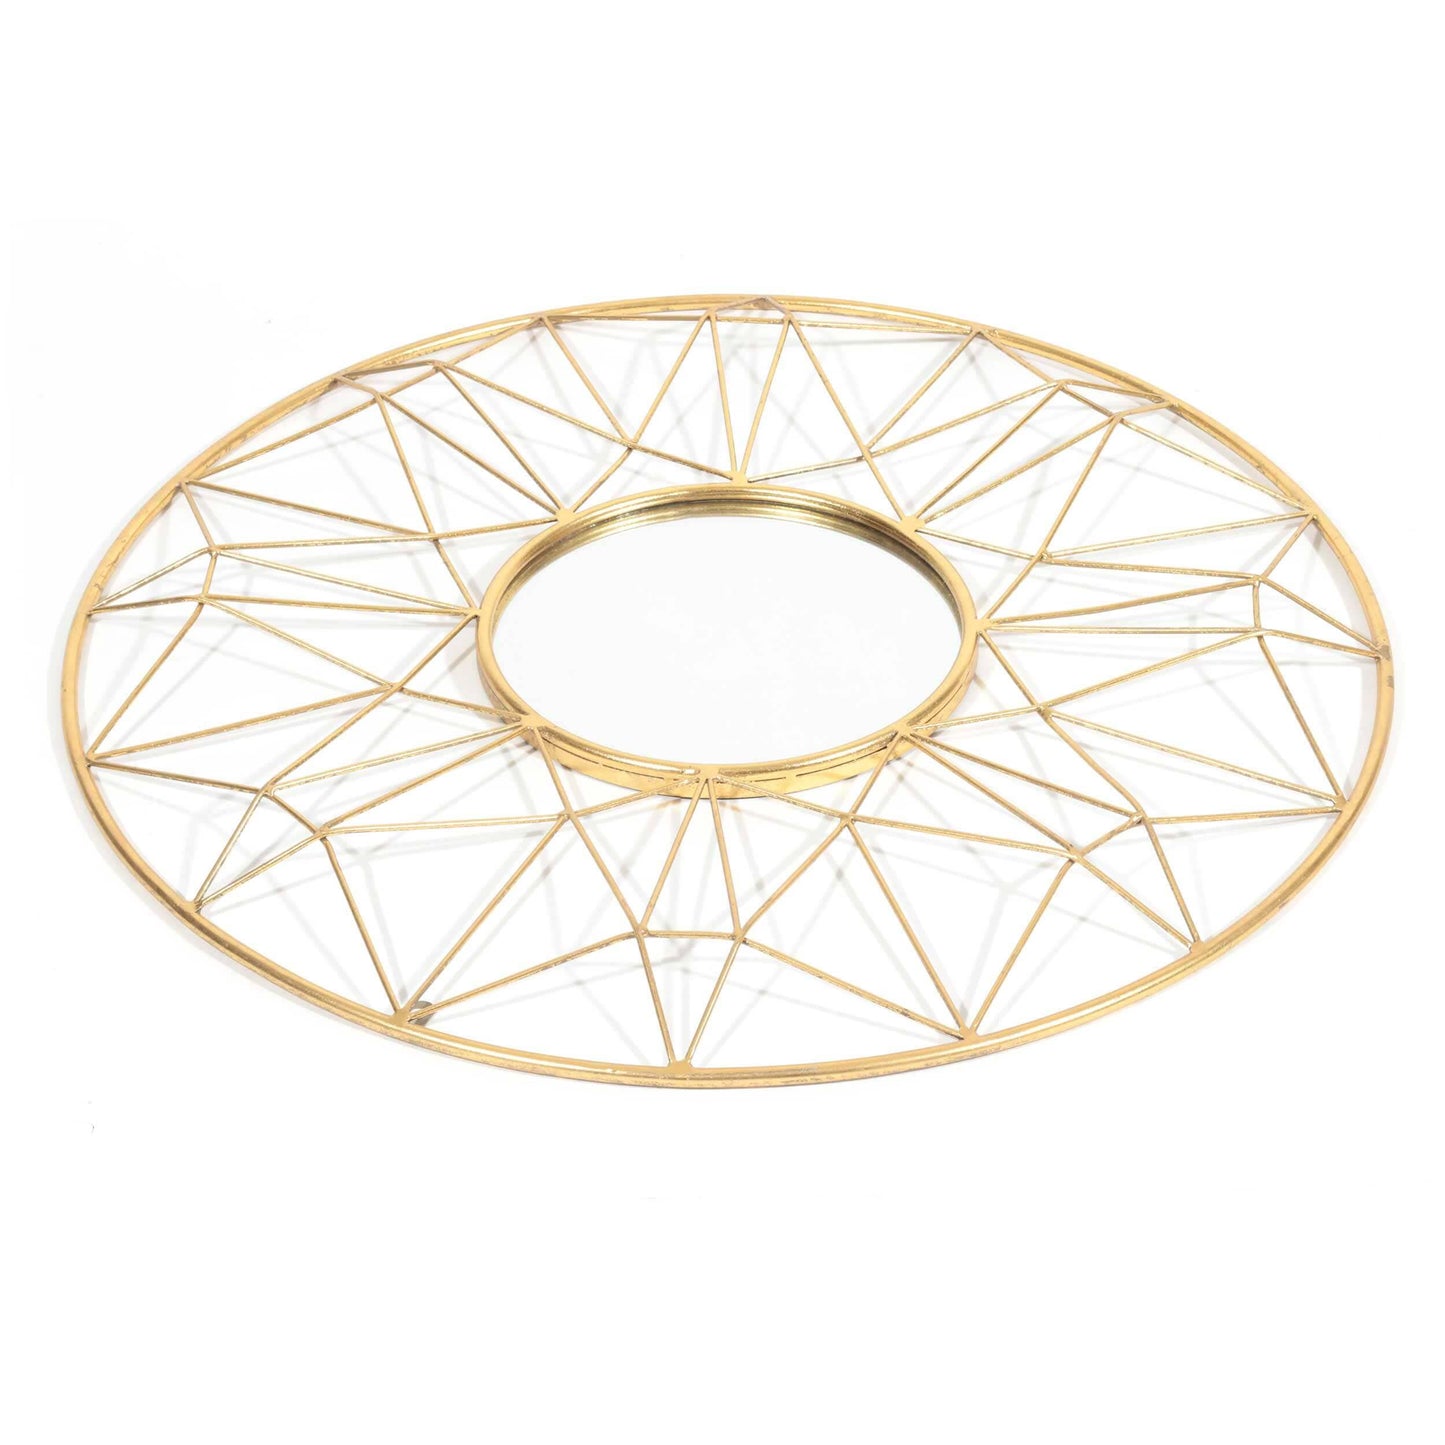 Gild Design Hana modern decorative mirror showcasing intricate circular metalwork.